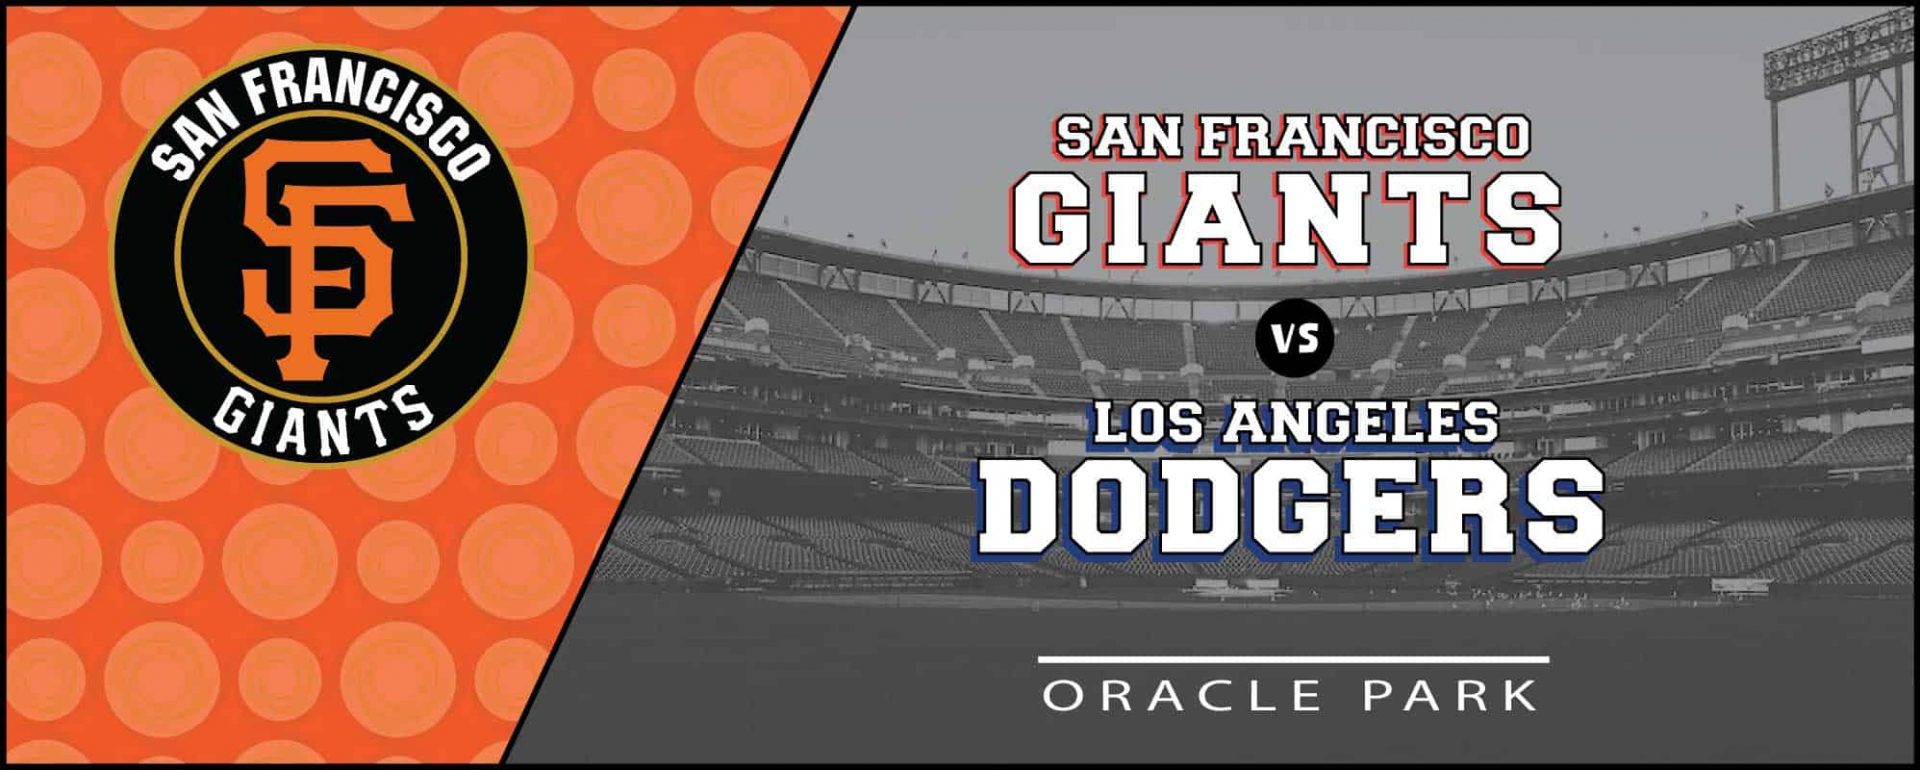 SF Giants vs. LA Dodgers